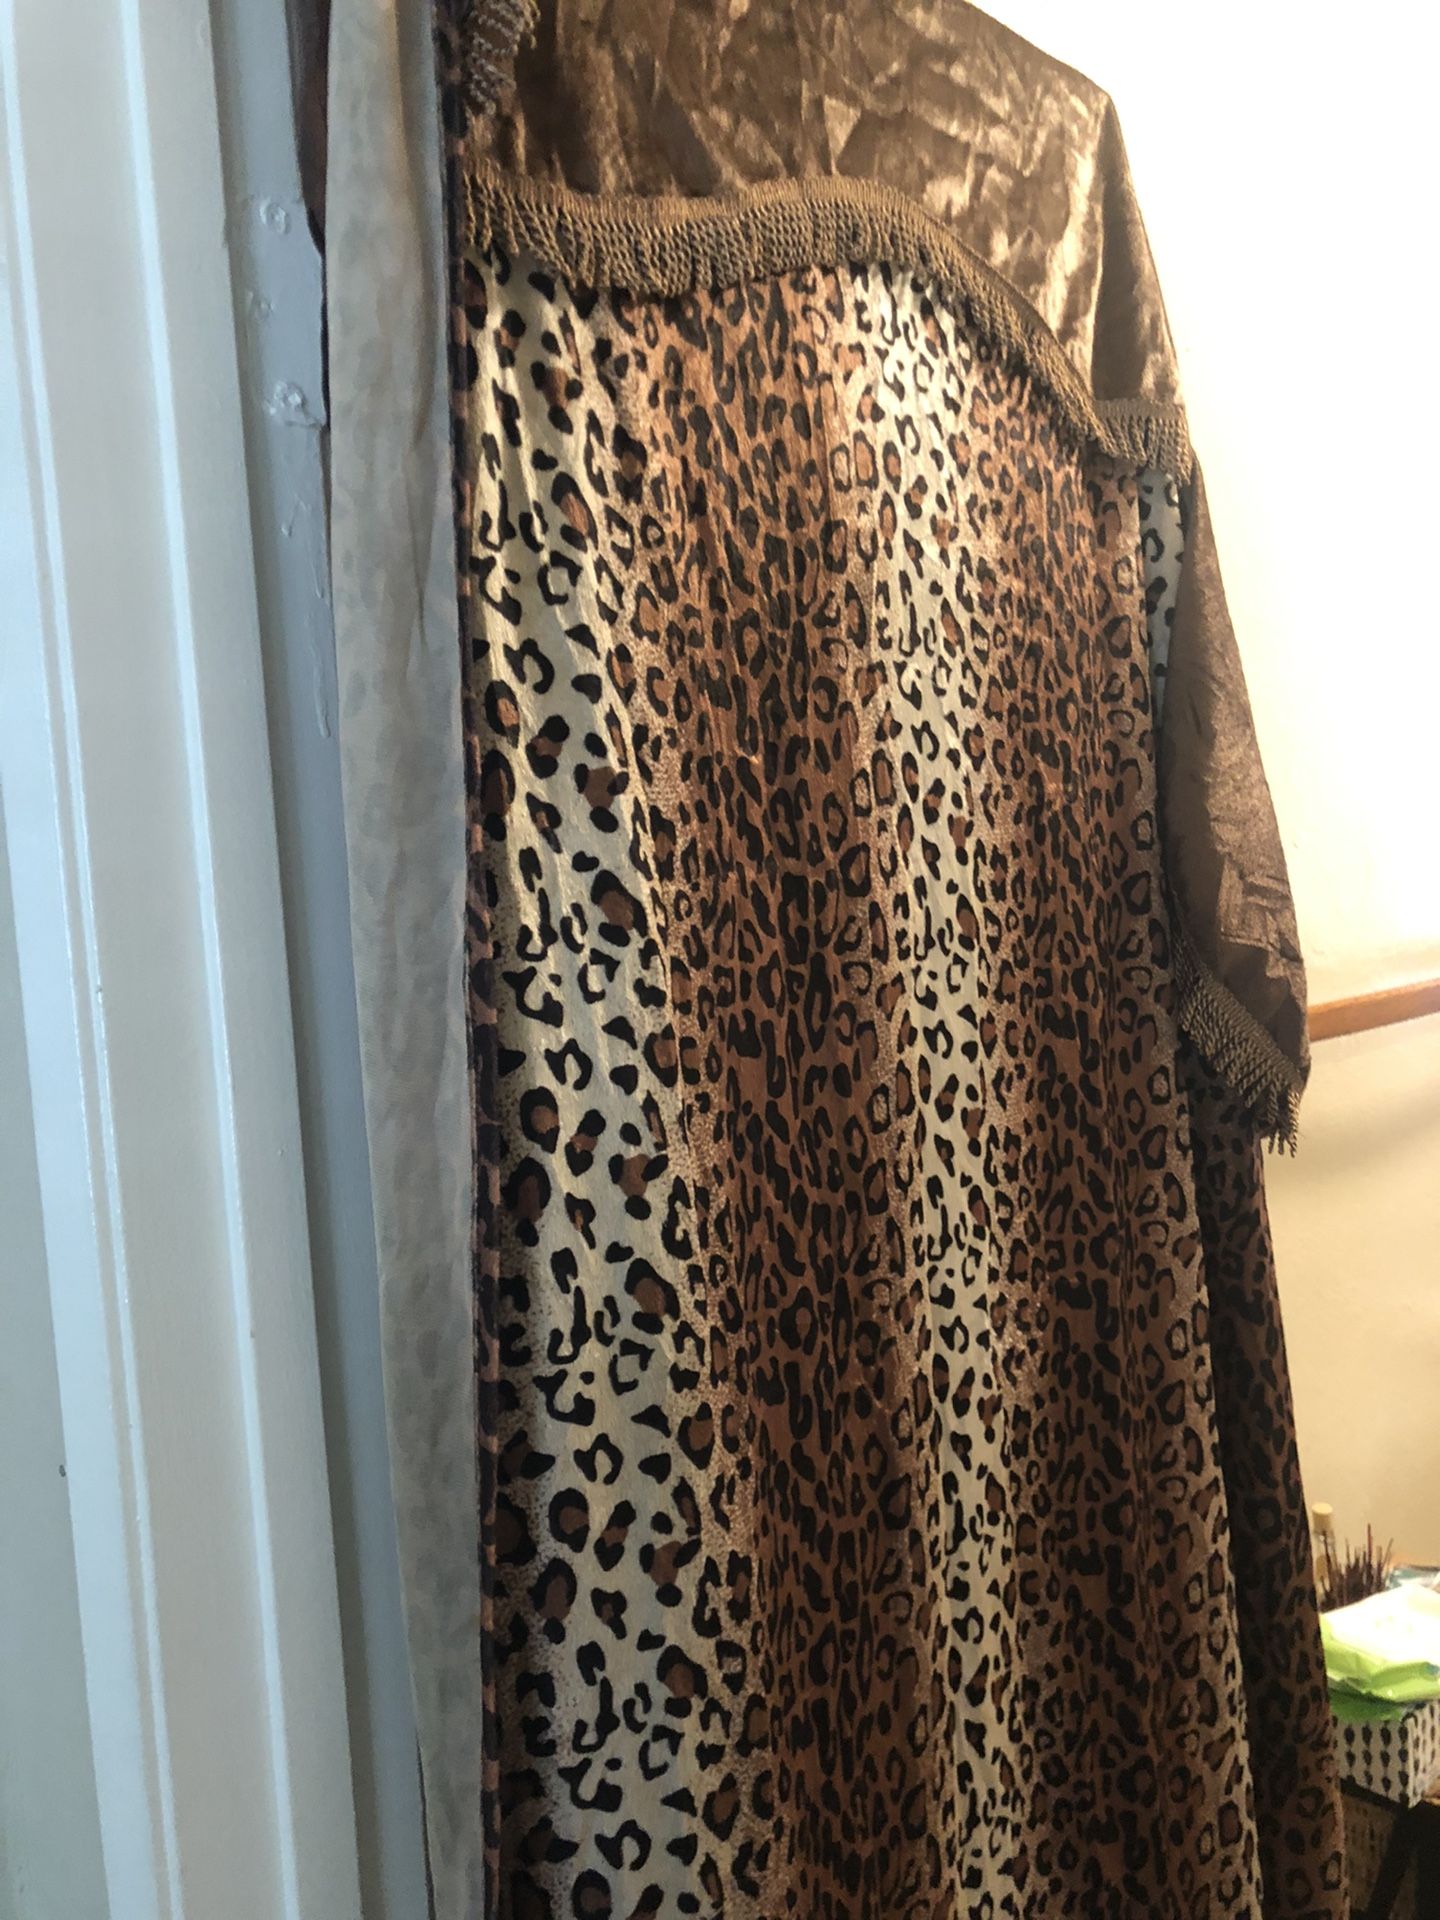 Leopard Print & Brown Curtains